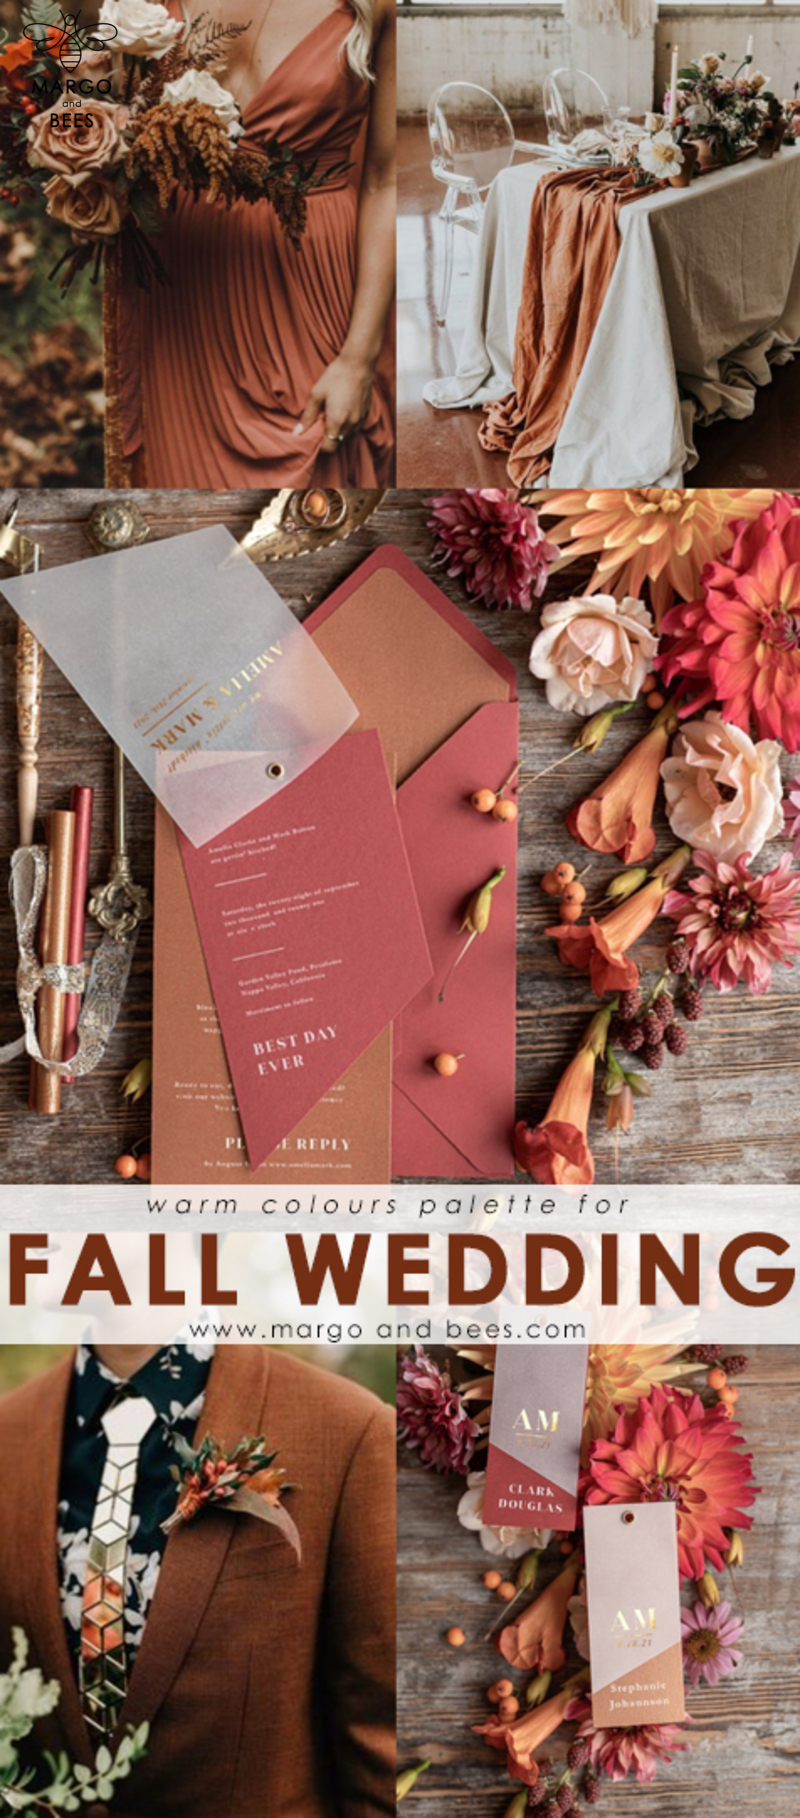 Geometric wedding invitation Suite, Red  Gold Copper Indian  Wedding Cards,  Modern Vellum Wedding Invites -1